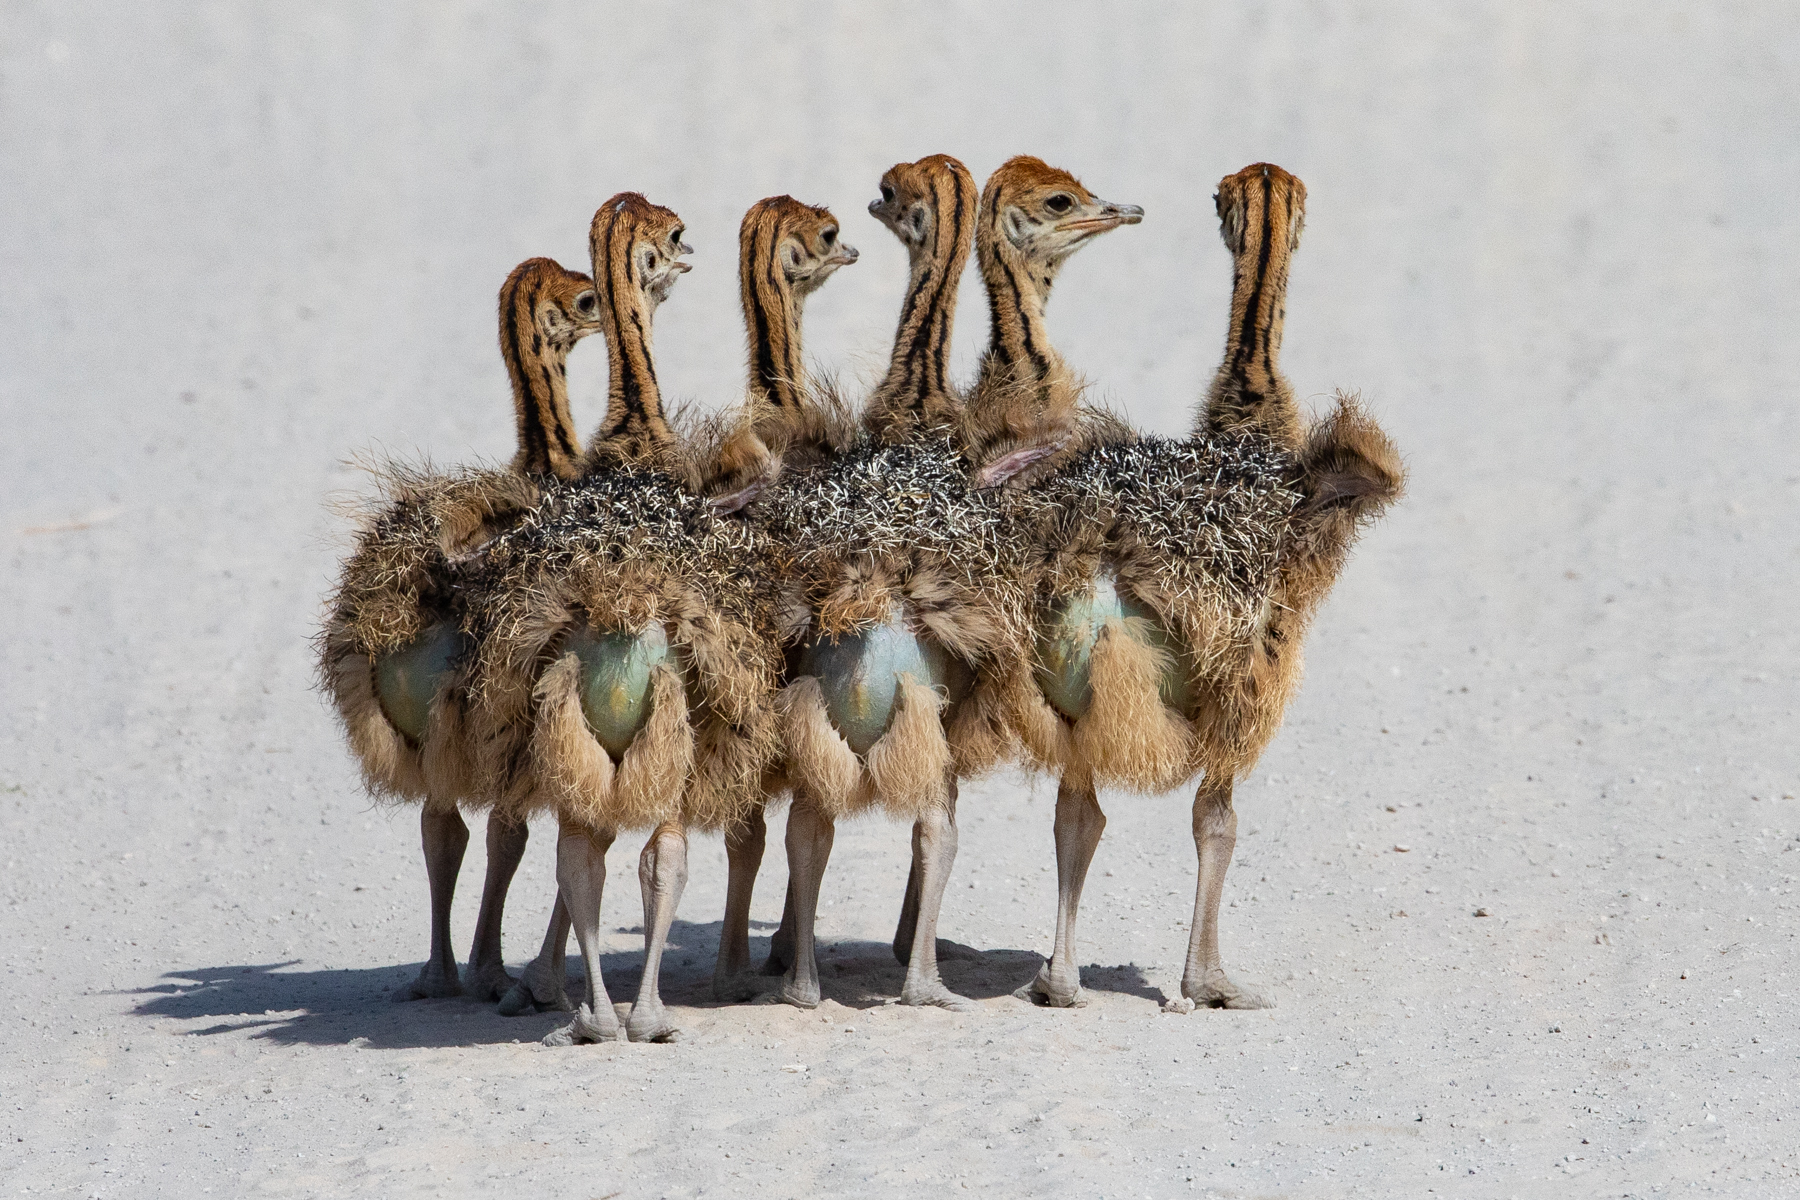 A huddle of Commnon Ostrich chicks